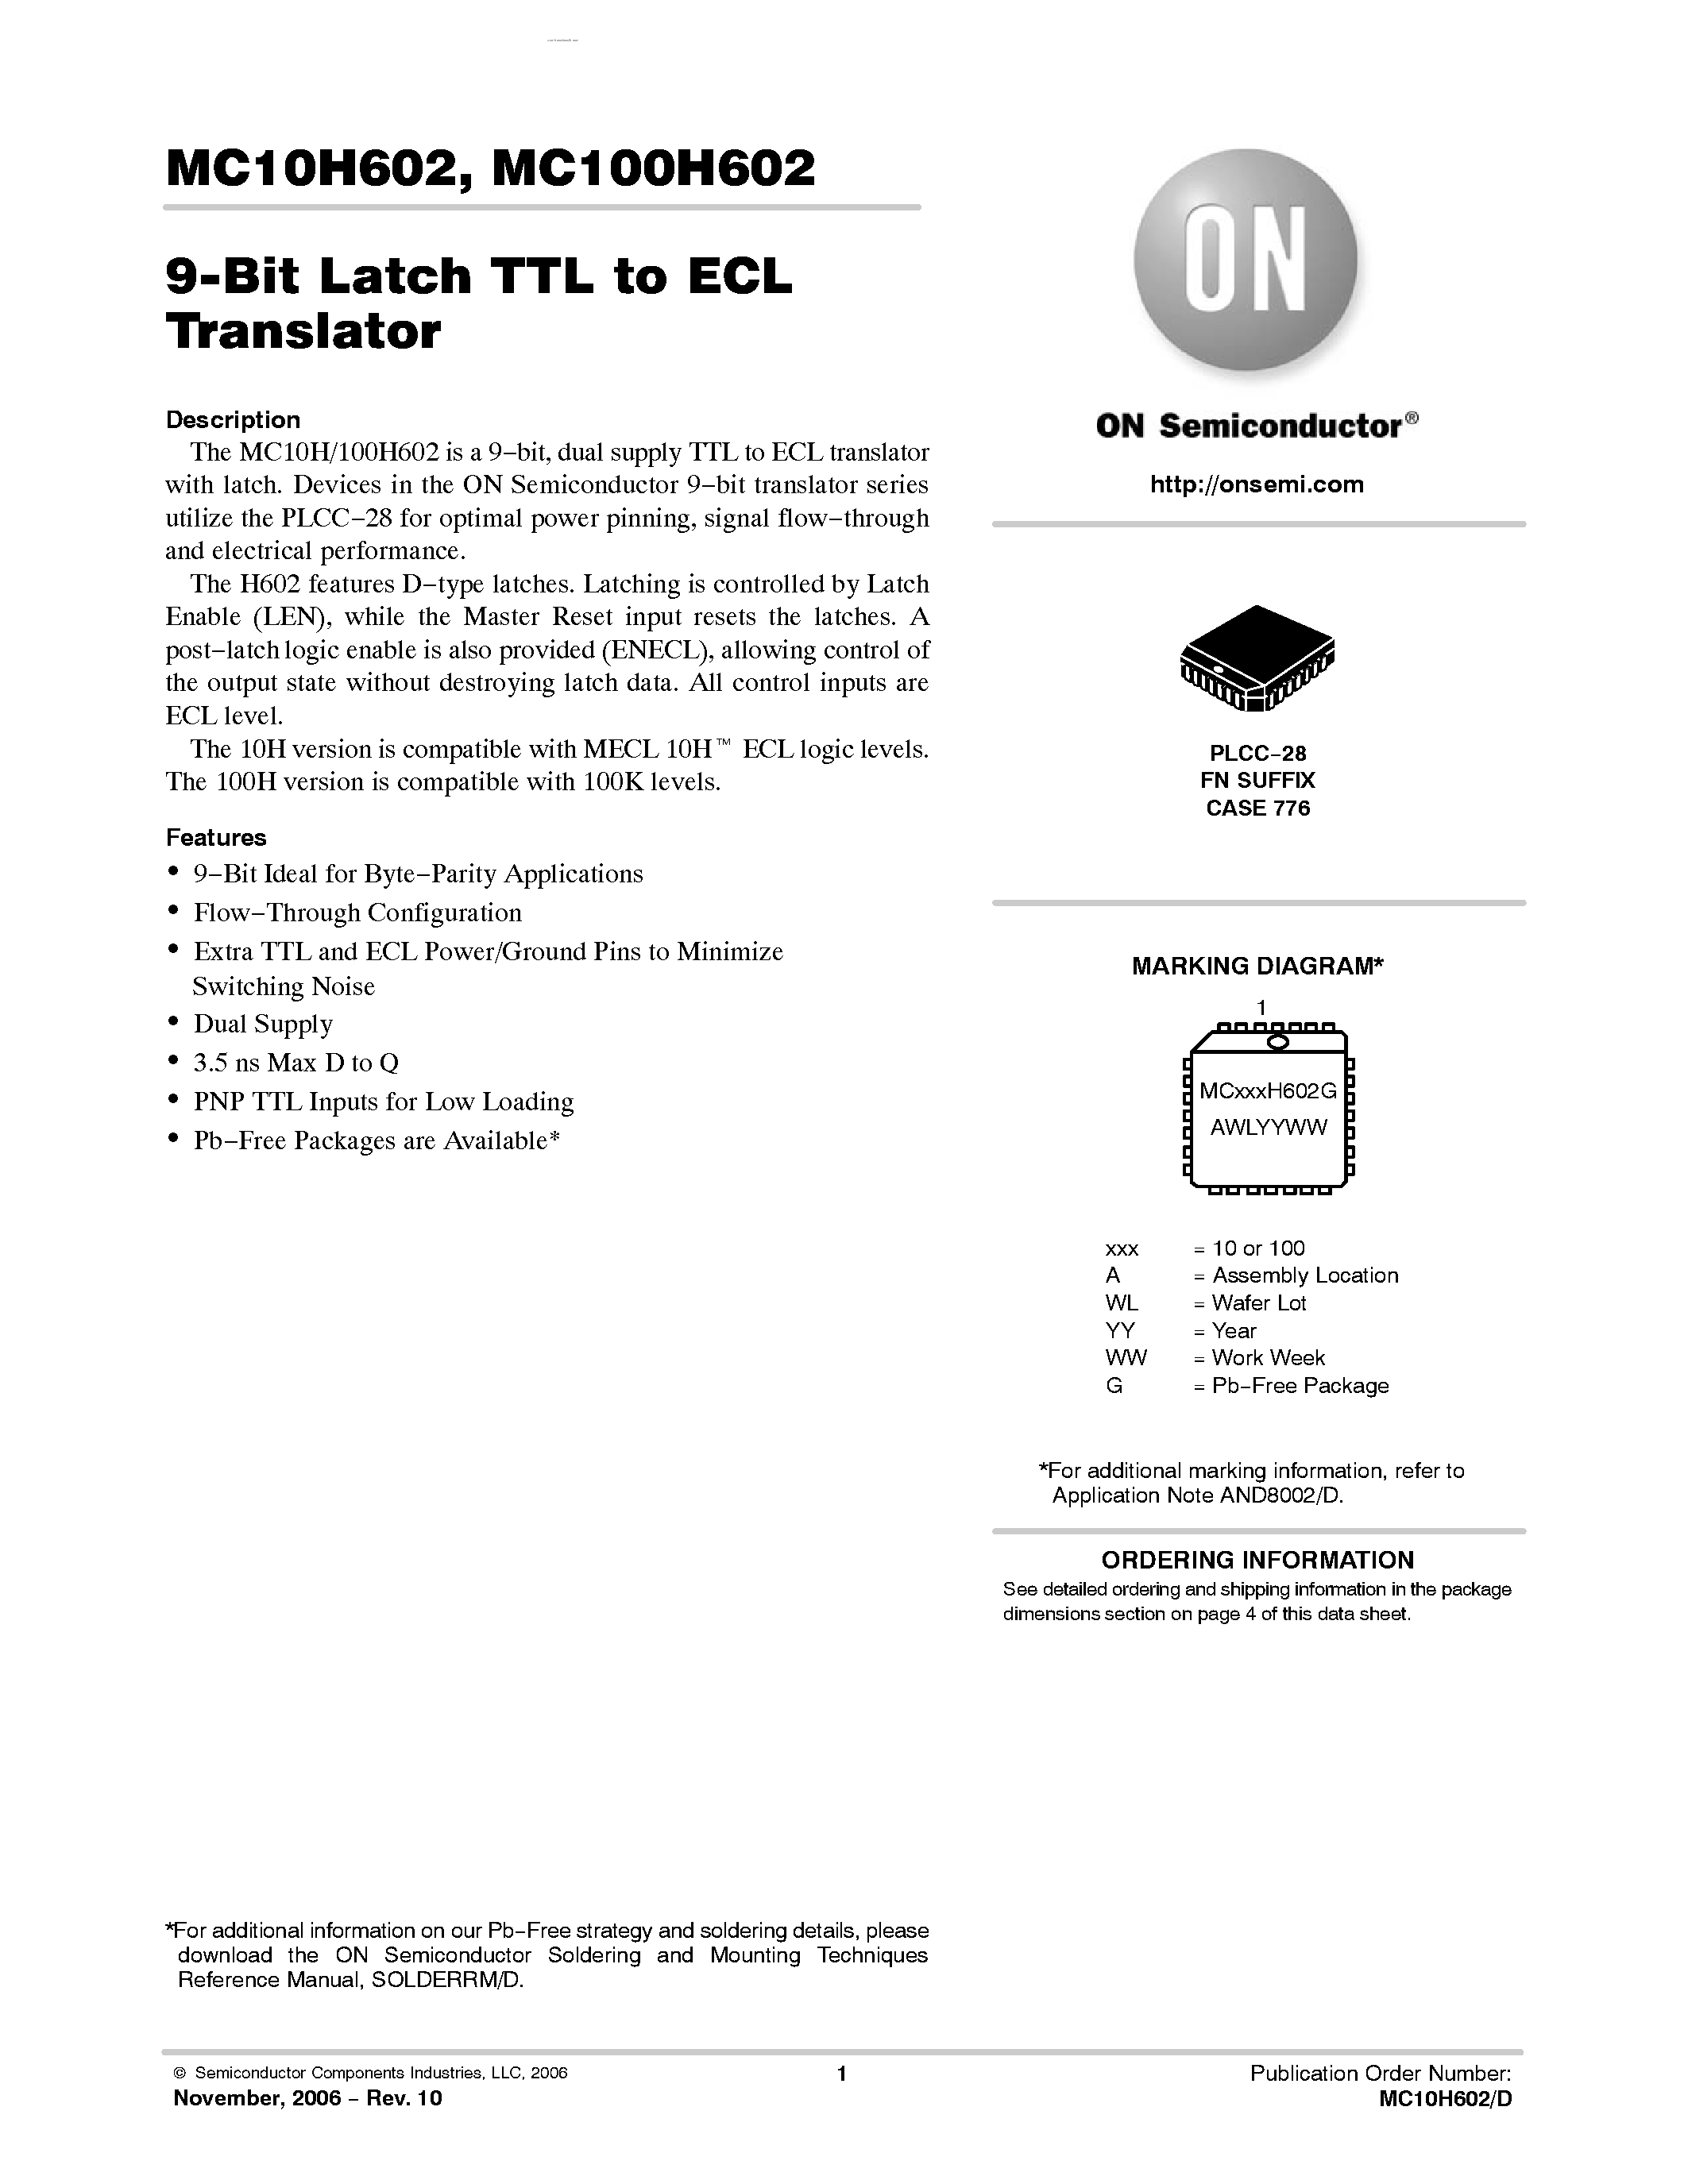 Datasheet MC10H602 - 9-Bit Latch TTL/ECL Translator page 1